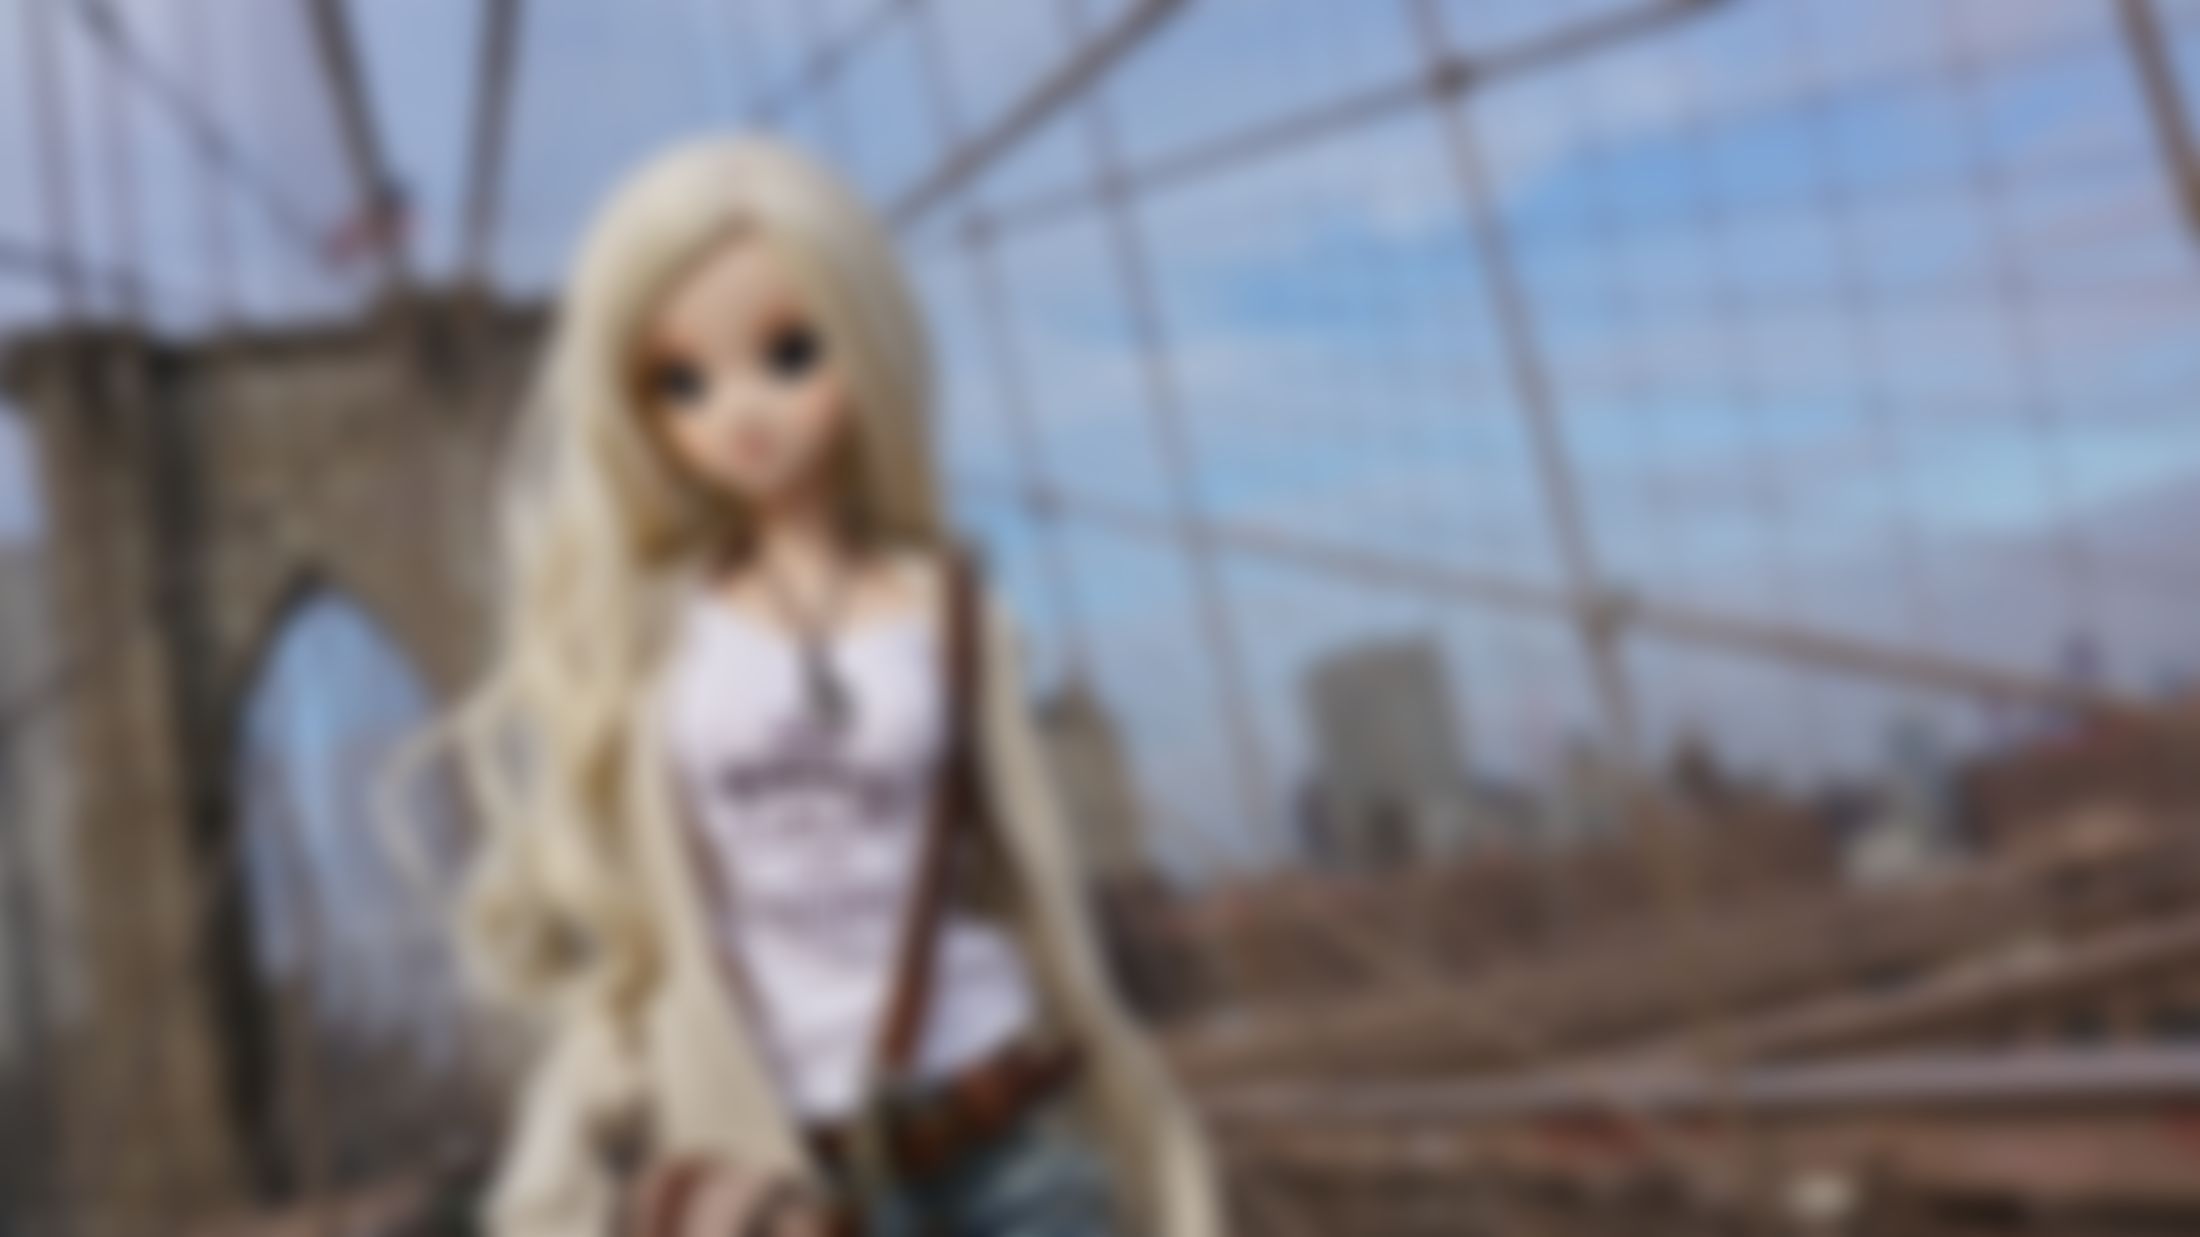 Melody Smart Doll taking in the sights at Brooklyn Bridge